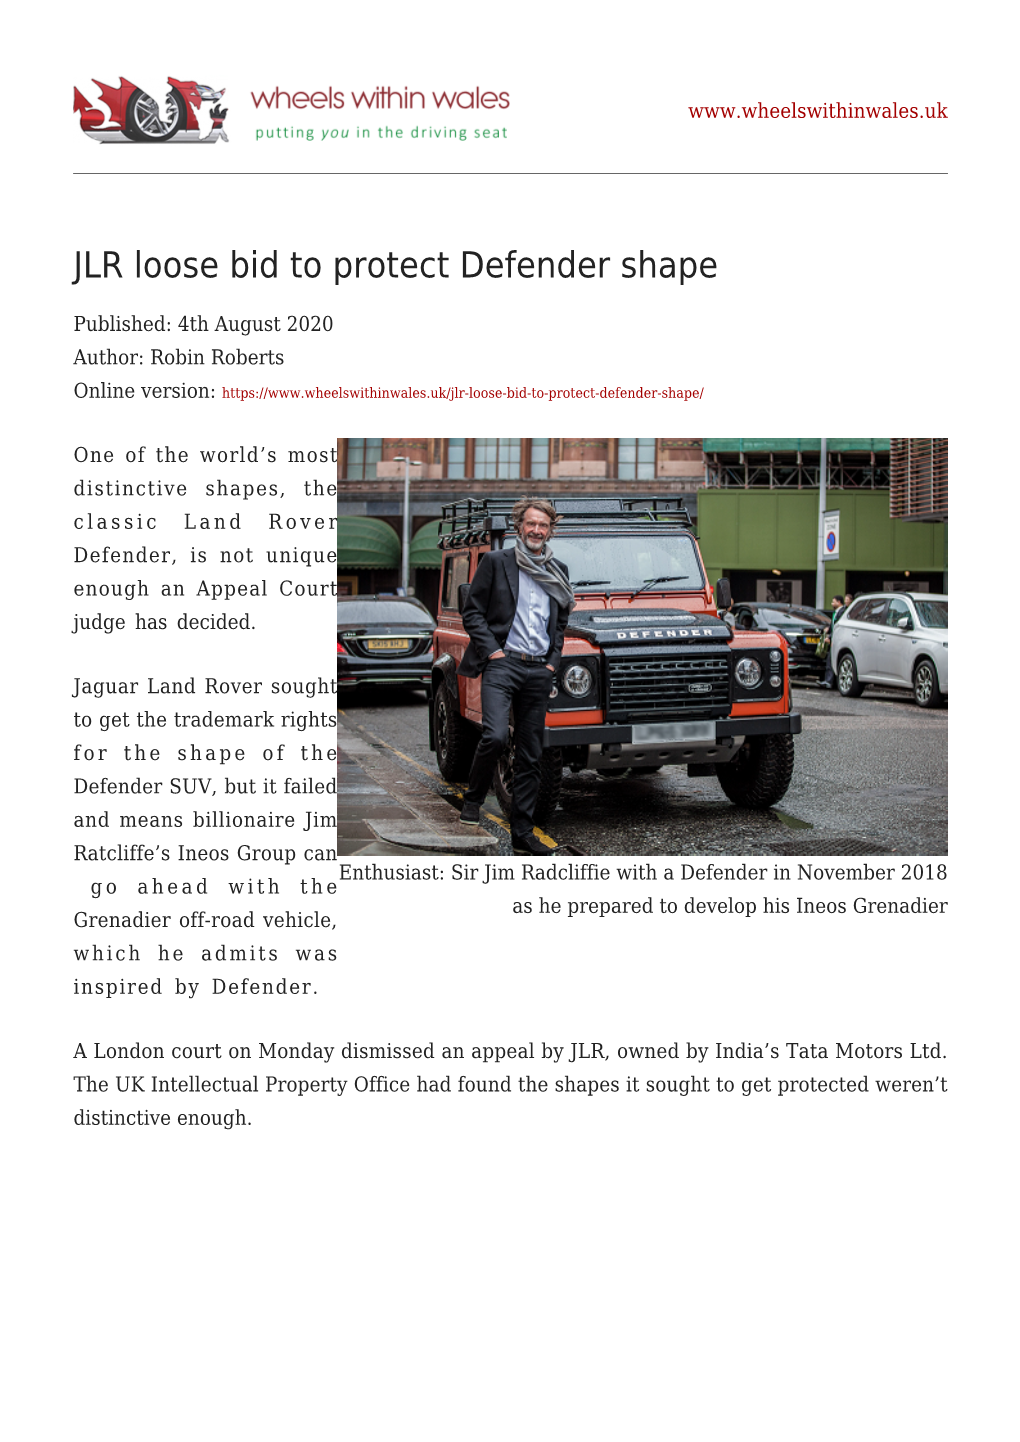 JLR Loose Bid to Protect Defender Shape